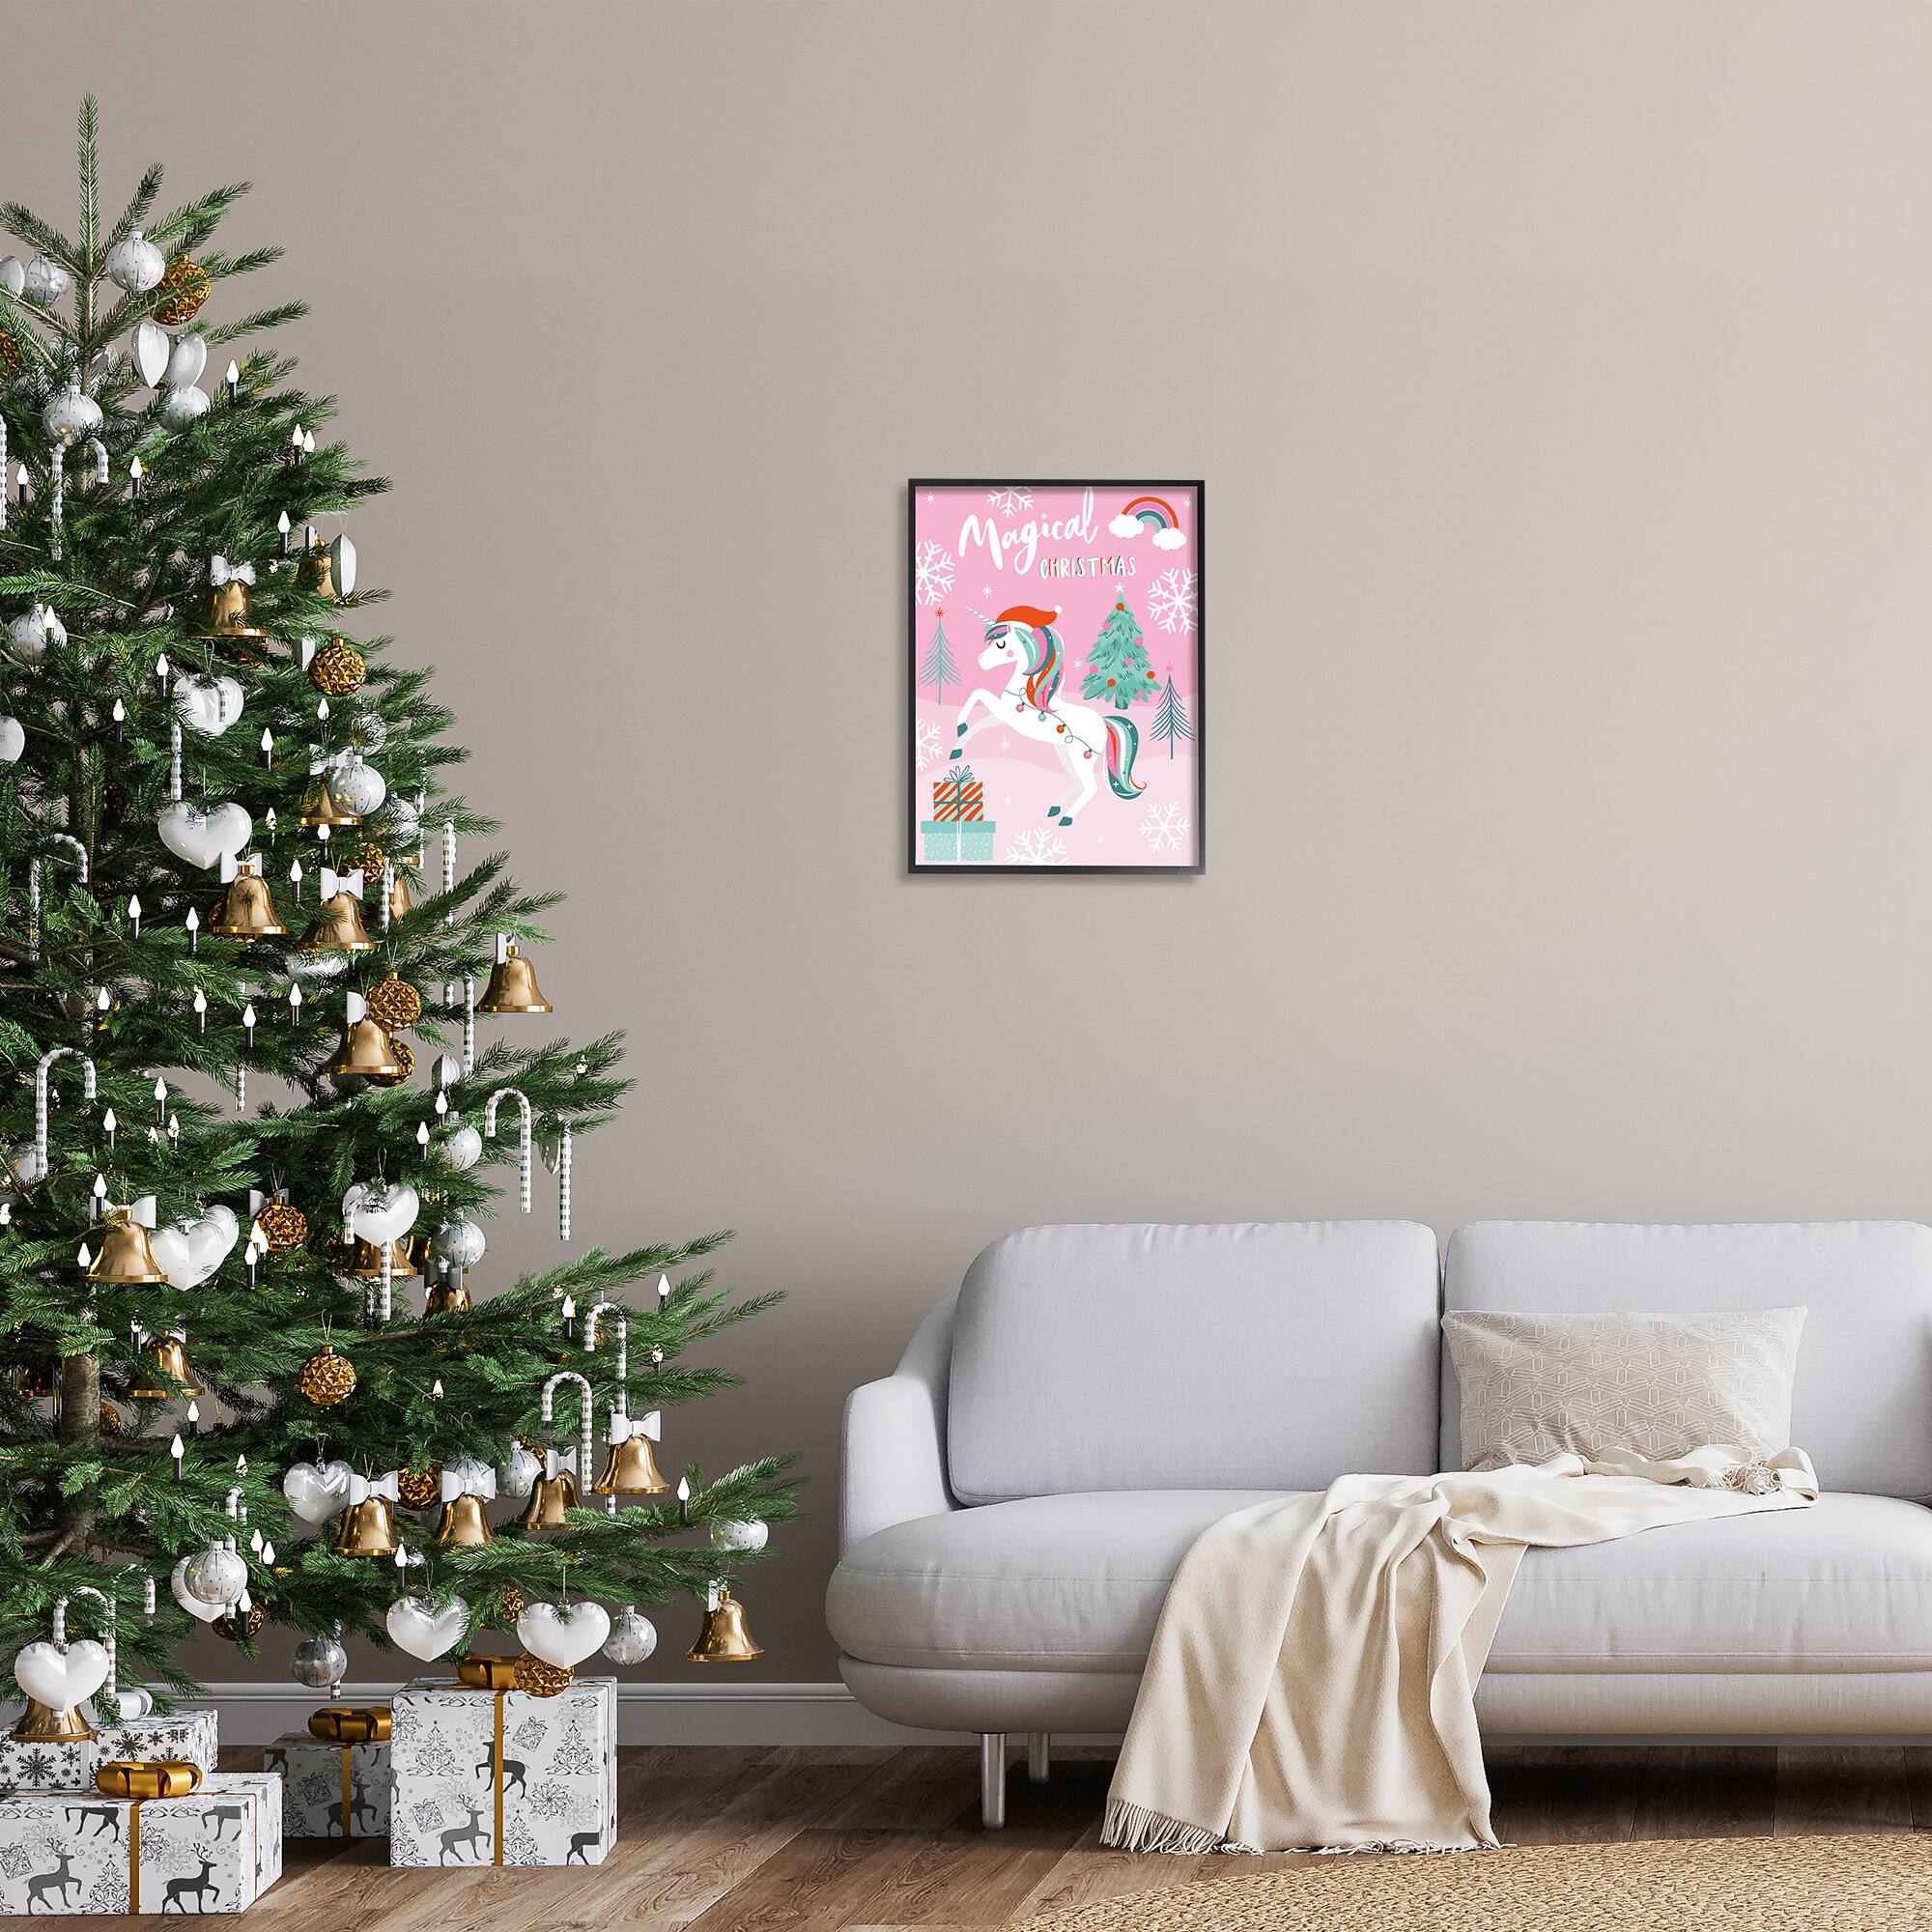 Stupell Industries Magical Christmas Pink Unicorn Framed Giclee Art